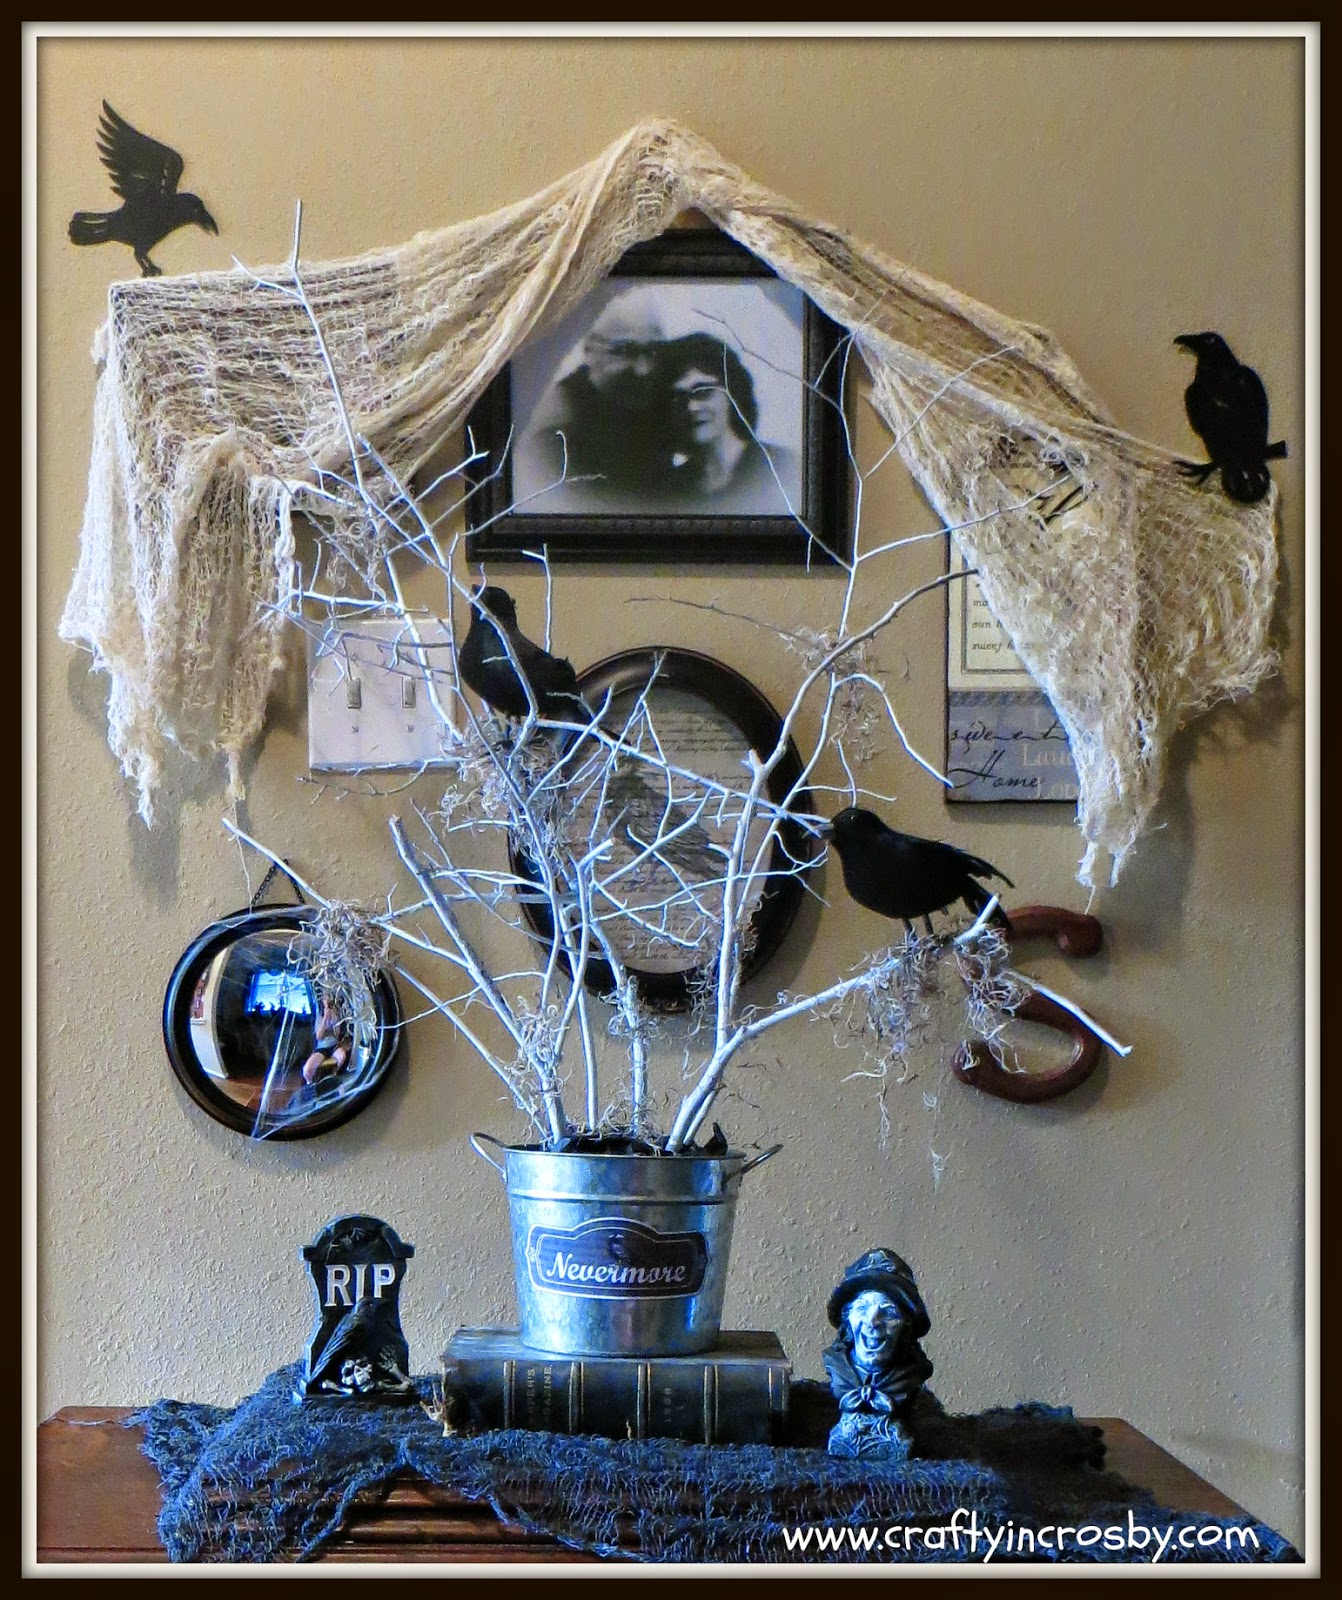 Edgar Allen Poe, The Raven, Halloween Printable, spooky, Easy Halloween DIY, Nevermore Quoth the Raven